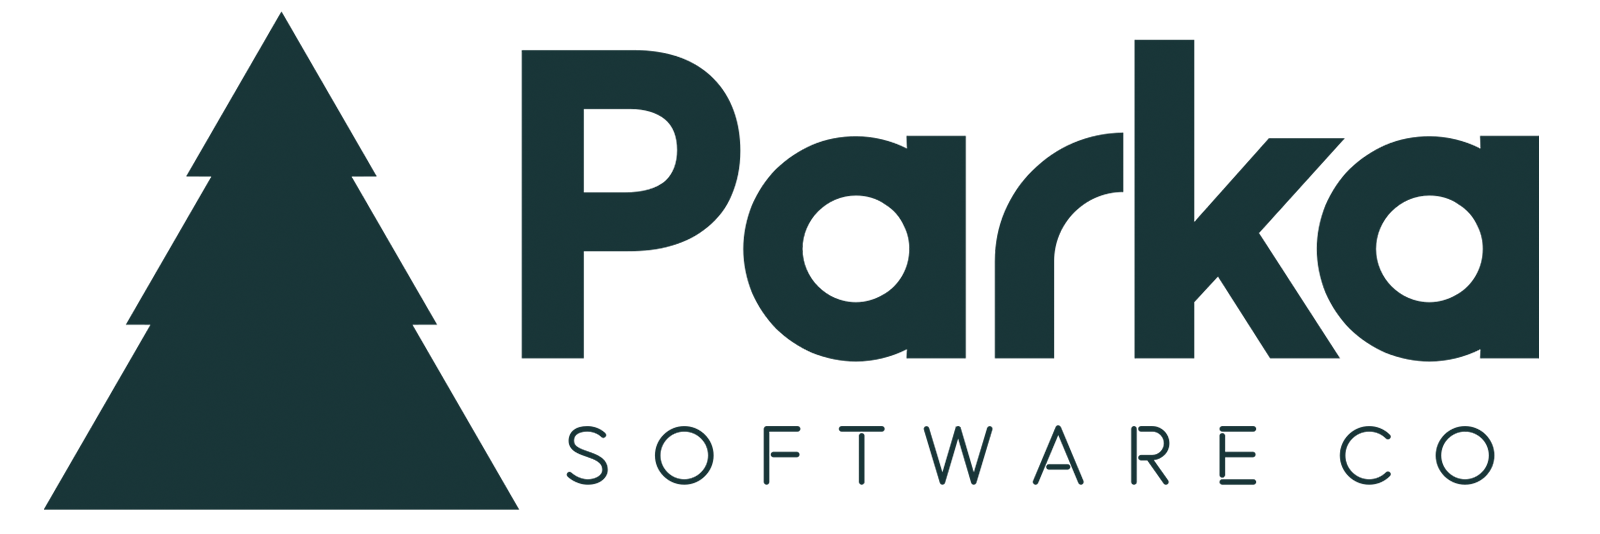 Parka Software Co. logo